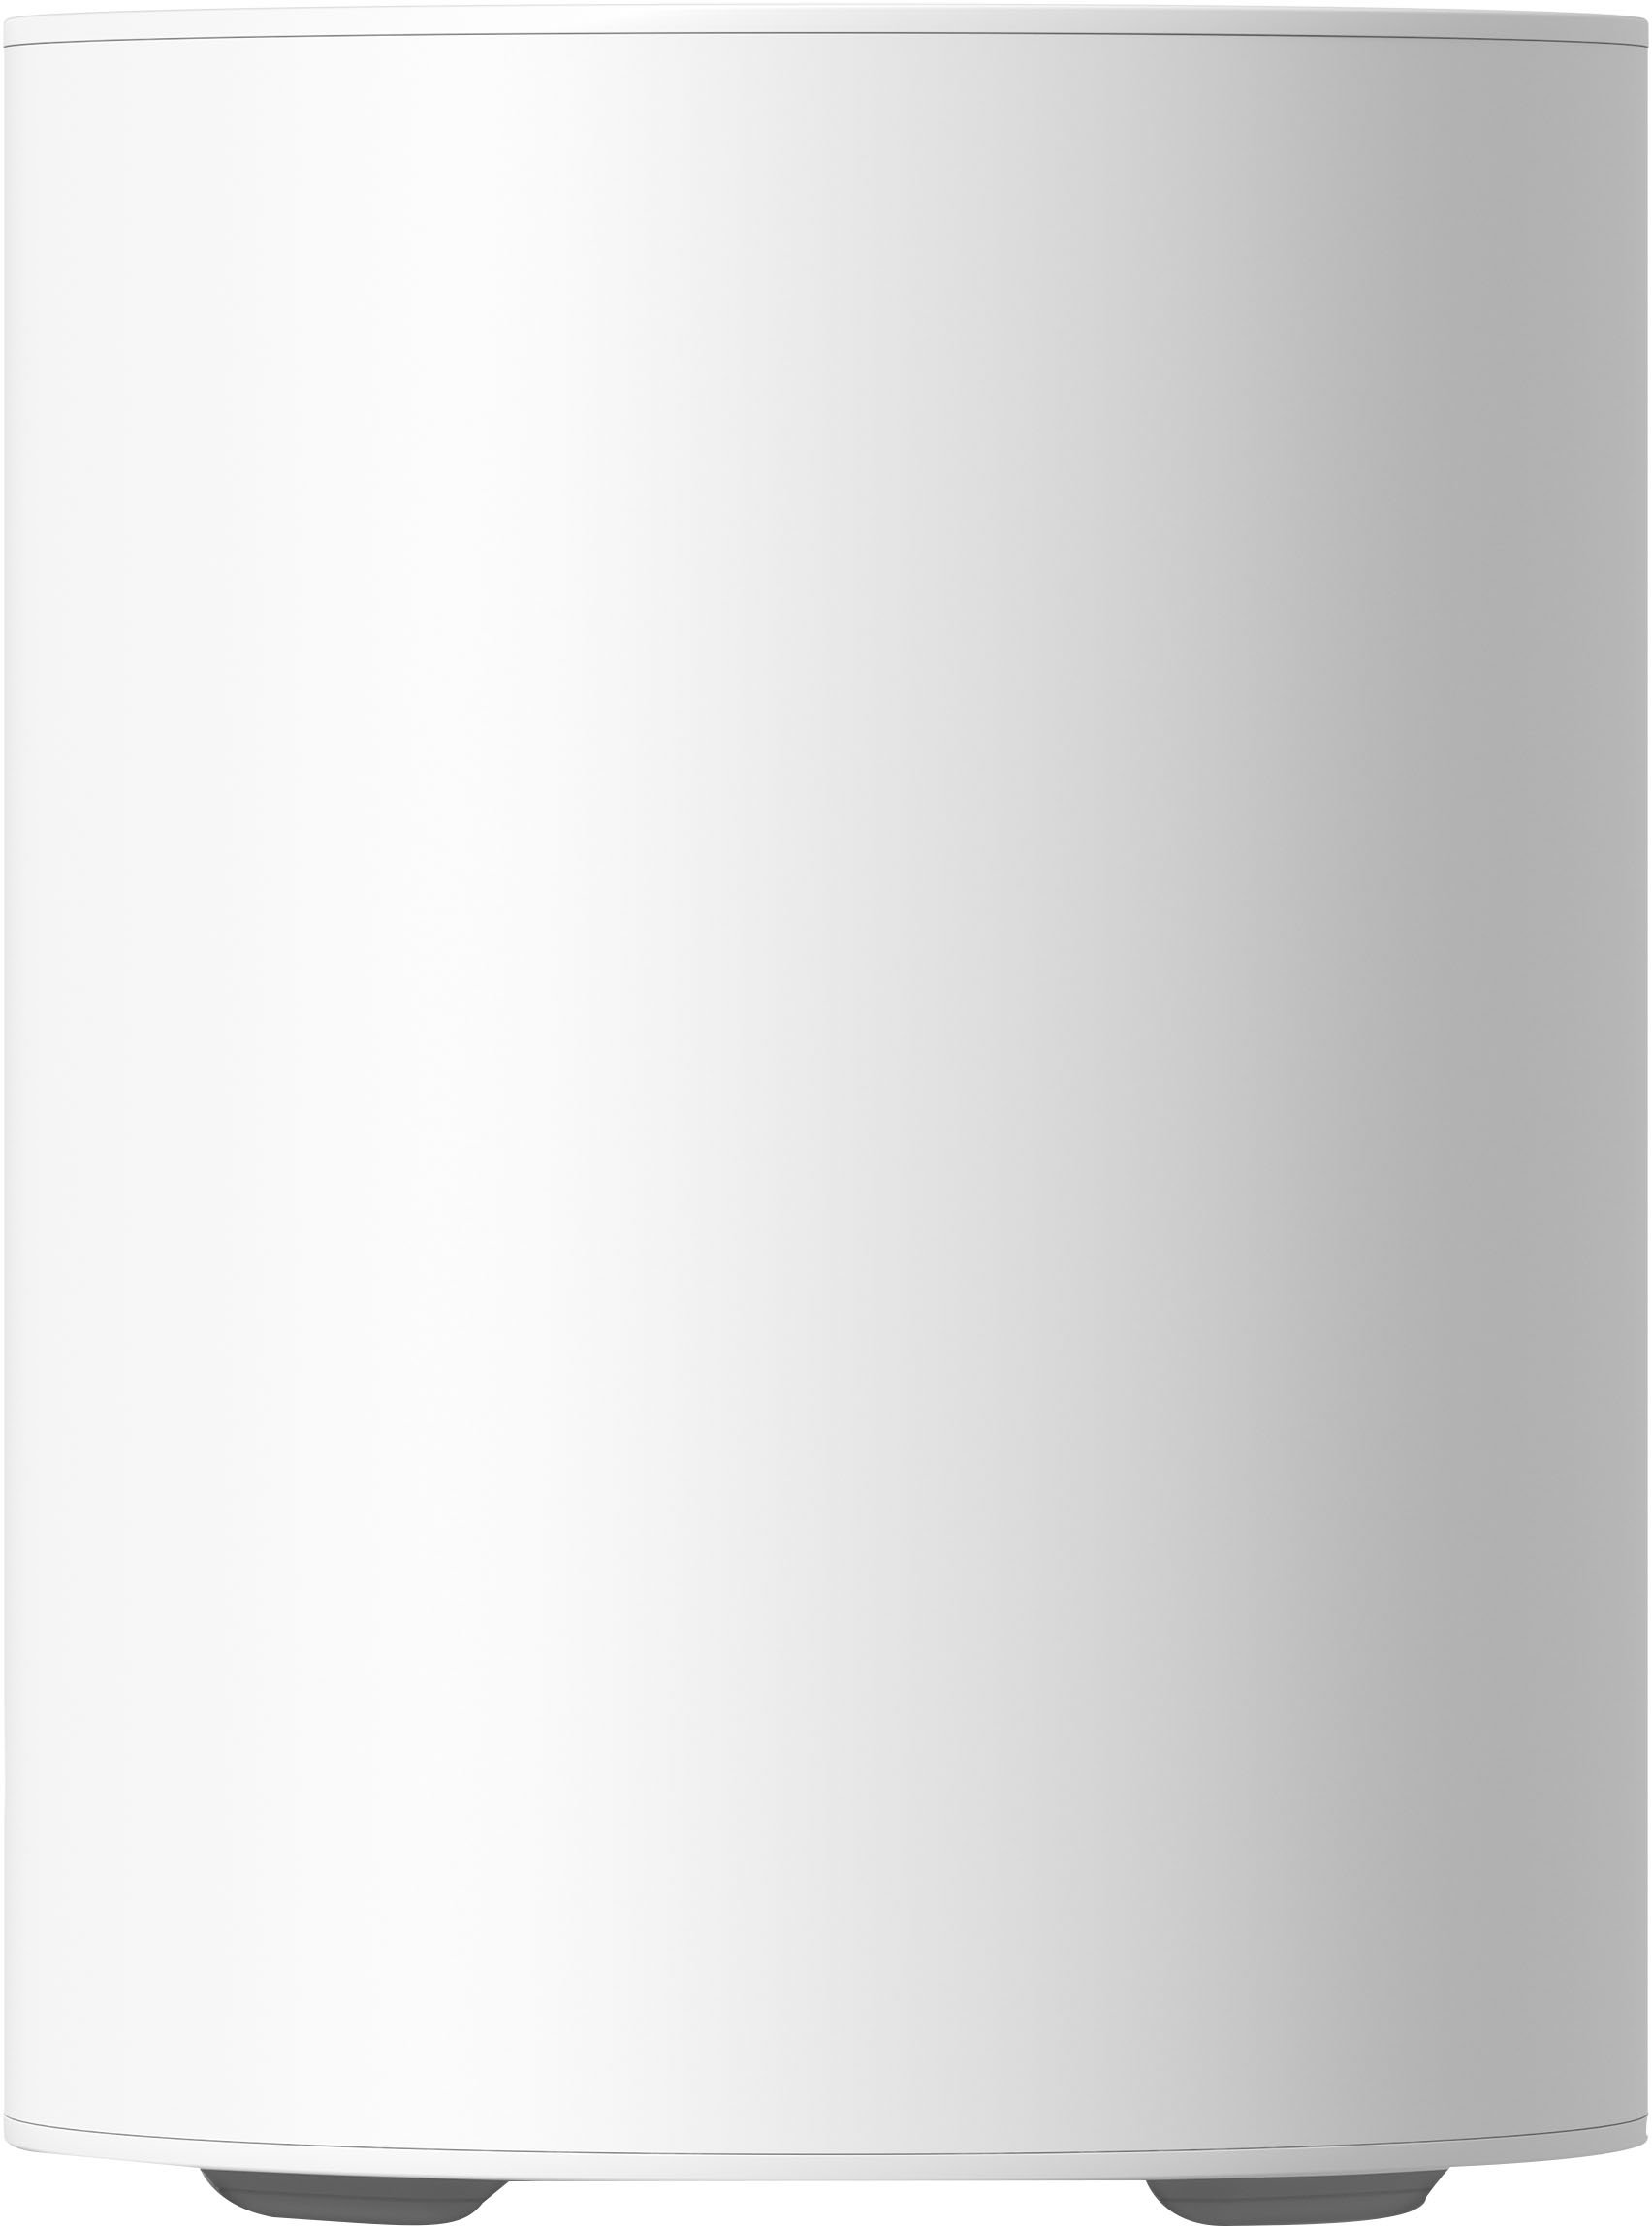 Back View: Sonos - Sub Mini Dual 6" Wifi Subwoofer - White